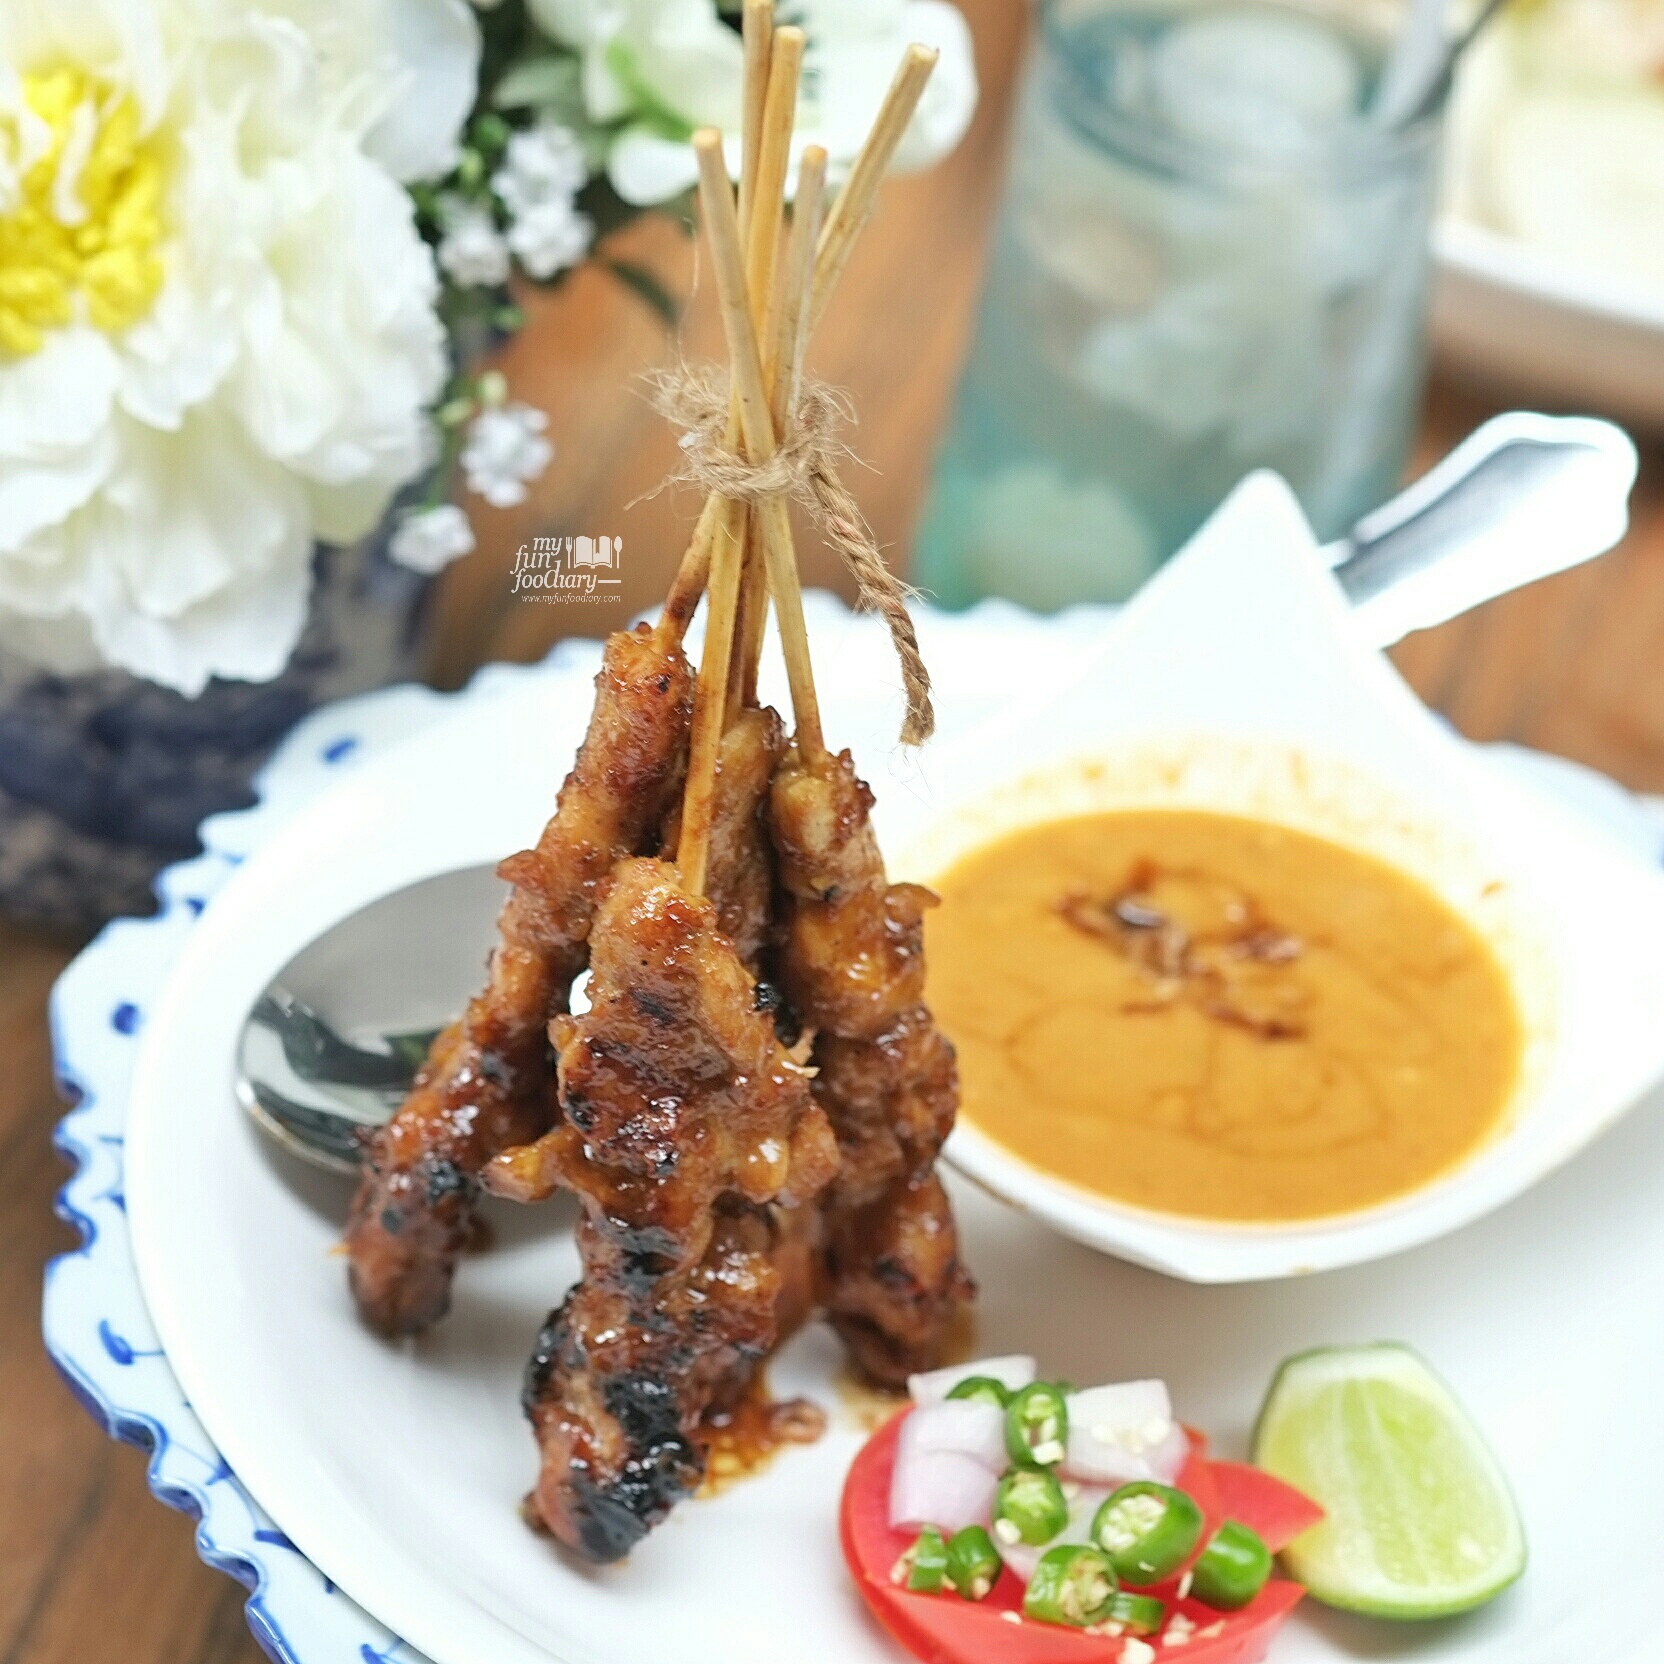 Chicken Satay at Blue Jasmine Restaurant by Myfunfoodiary 01